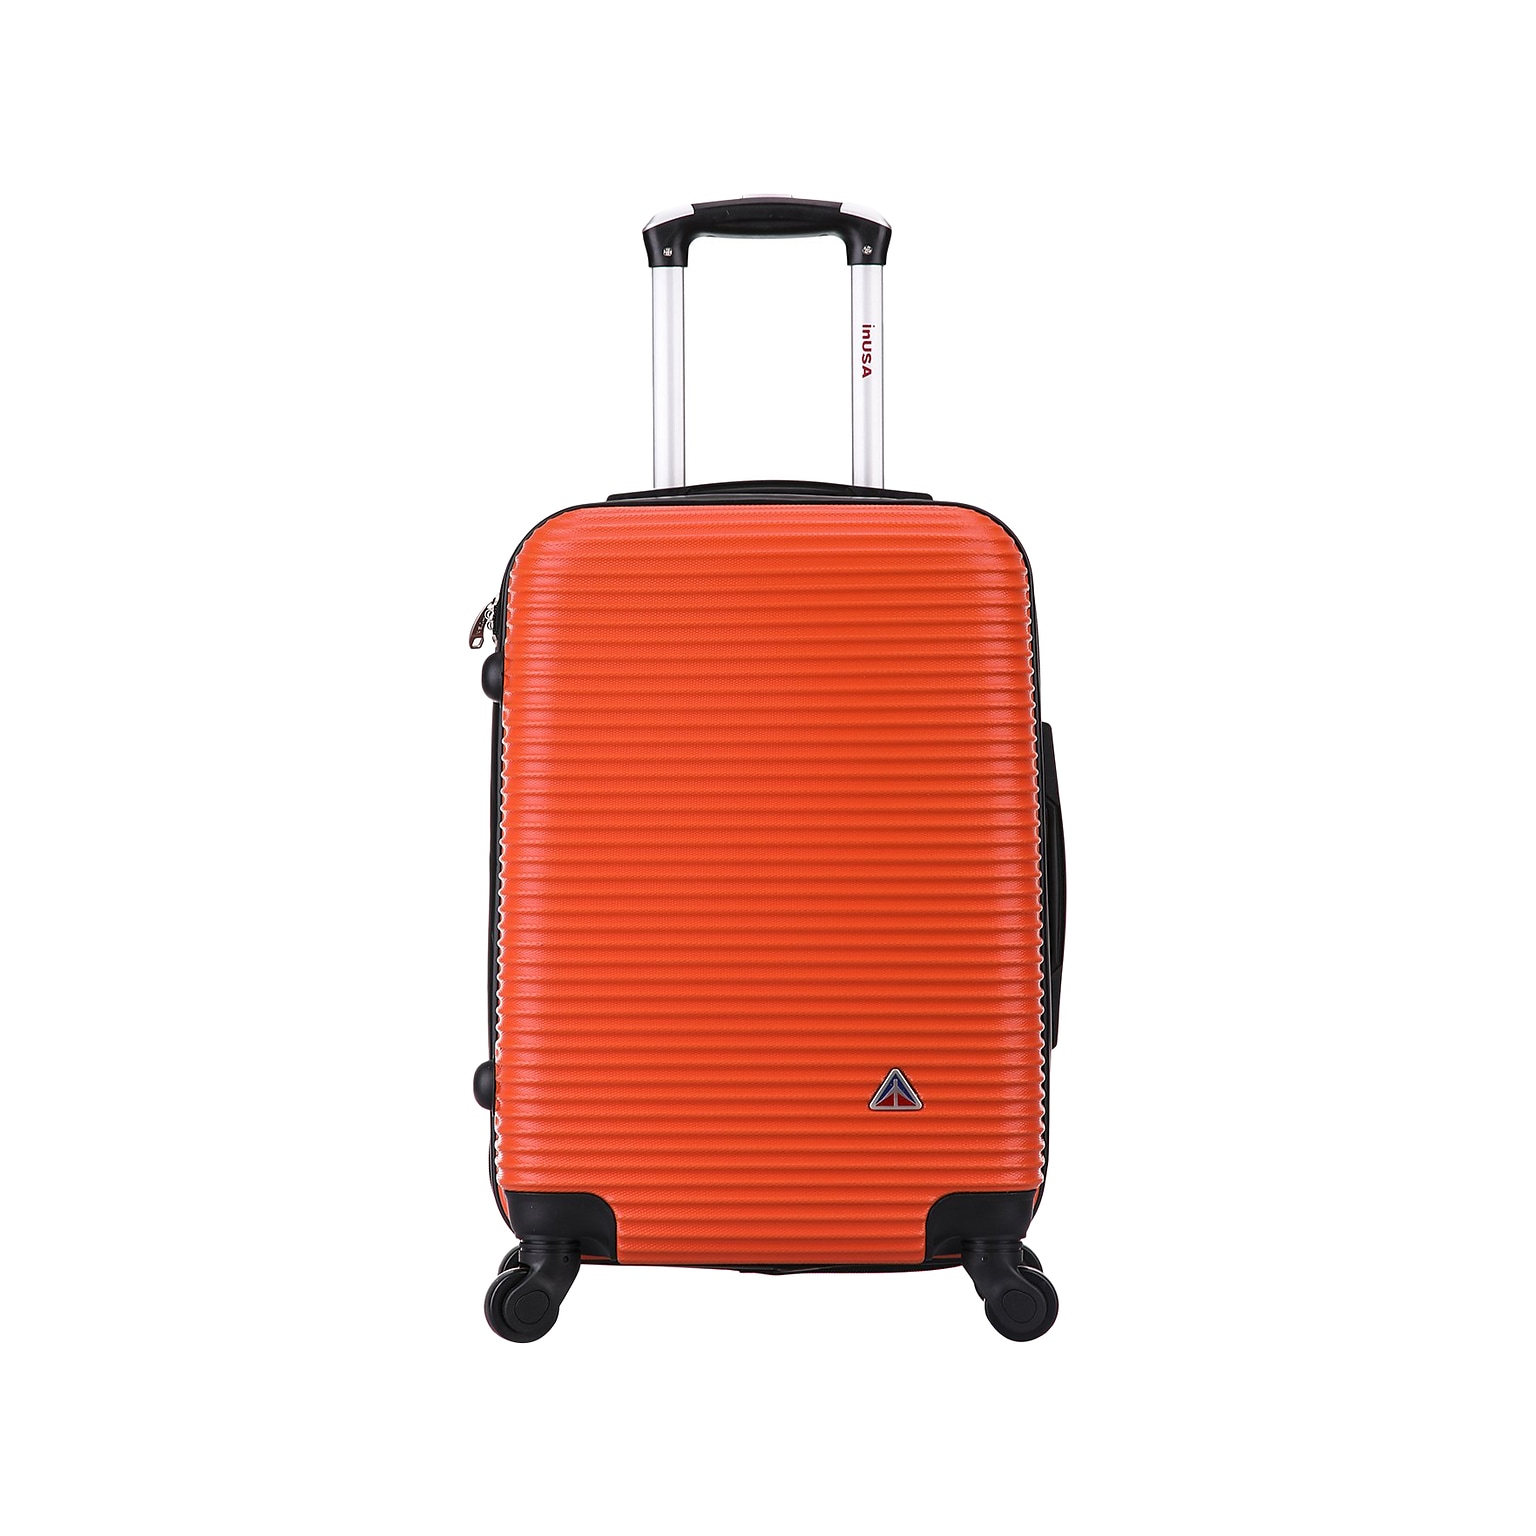 InUSA Royal 20 Hardside Carry-On Suitcase, 4-Wheeled Spinner, Orange (IUROY00S-ORG)